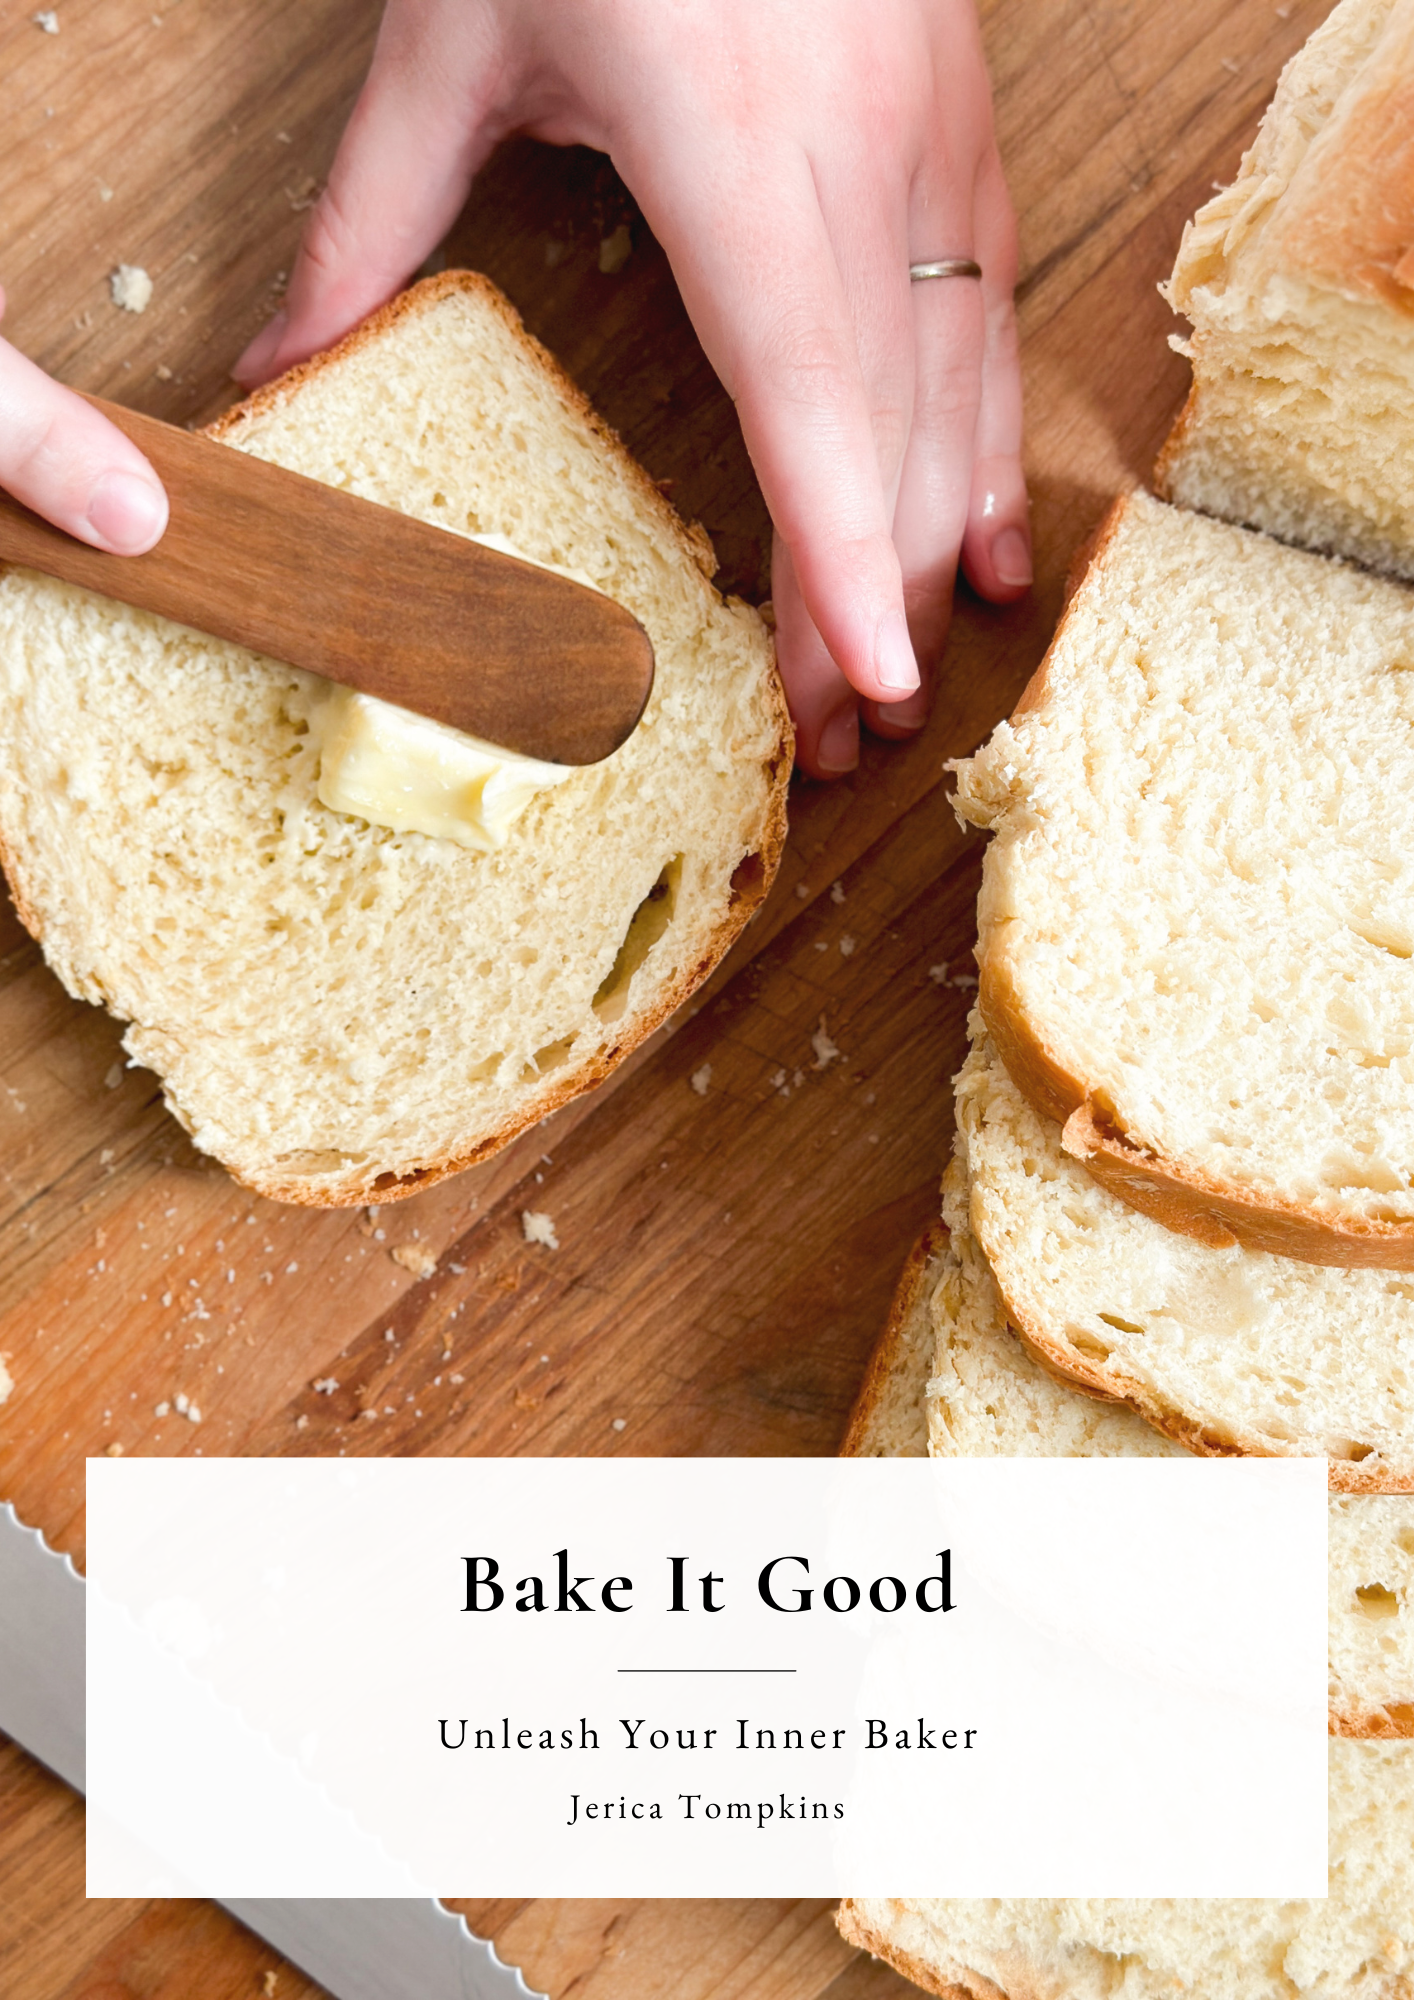 Bake It Good: Unleash Your Inner Baker (DIGITAL COOKBOOK)